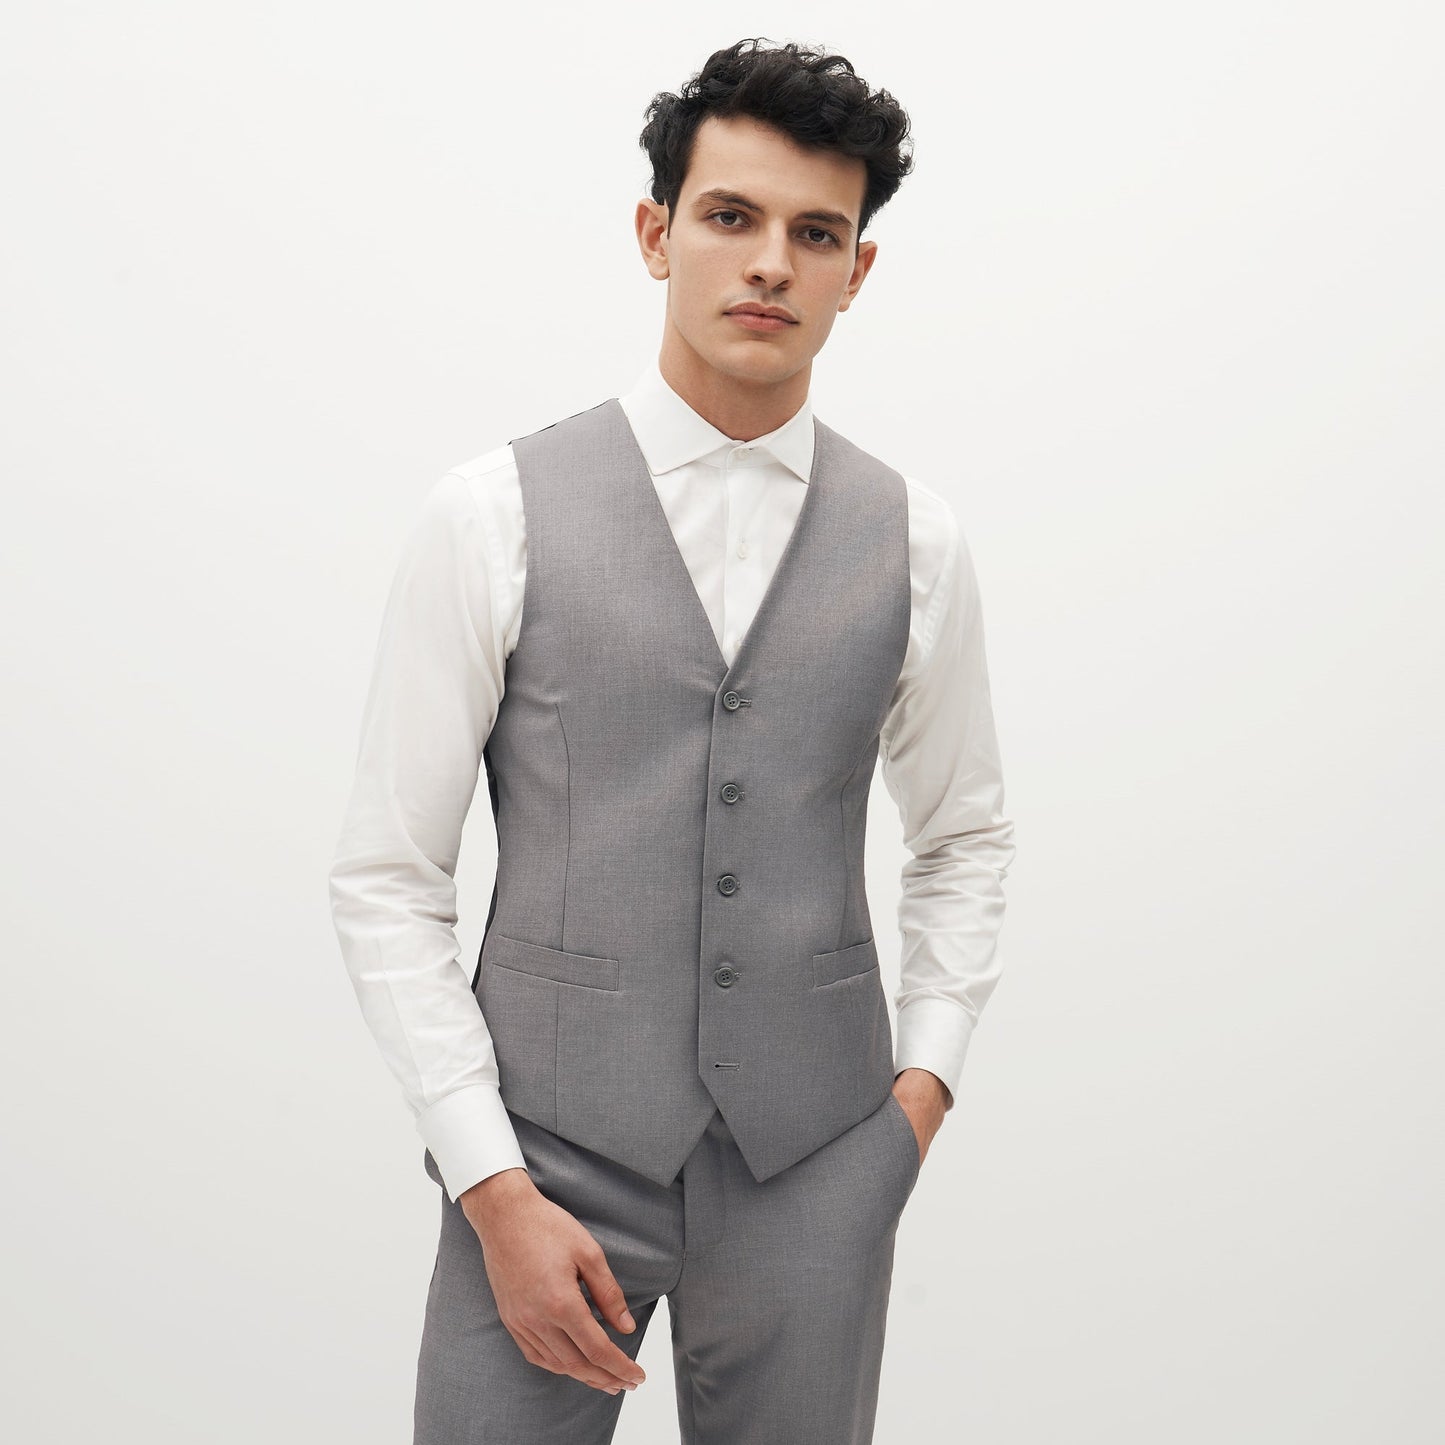 Textured Gray Suit Vest (Comfort Stretch) by SuitShop